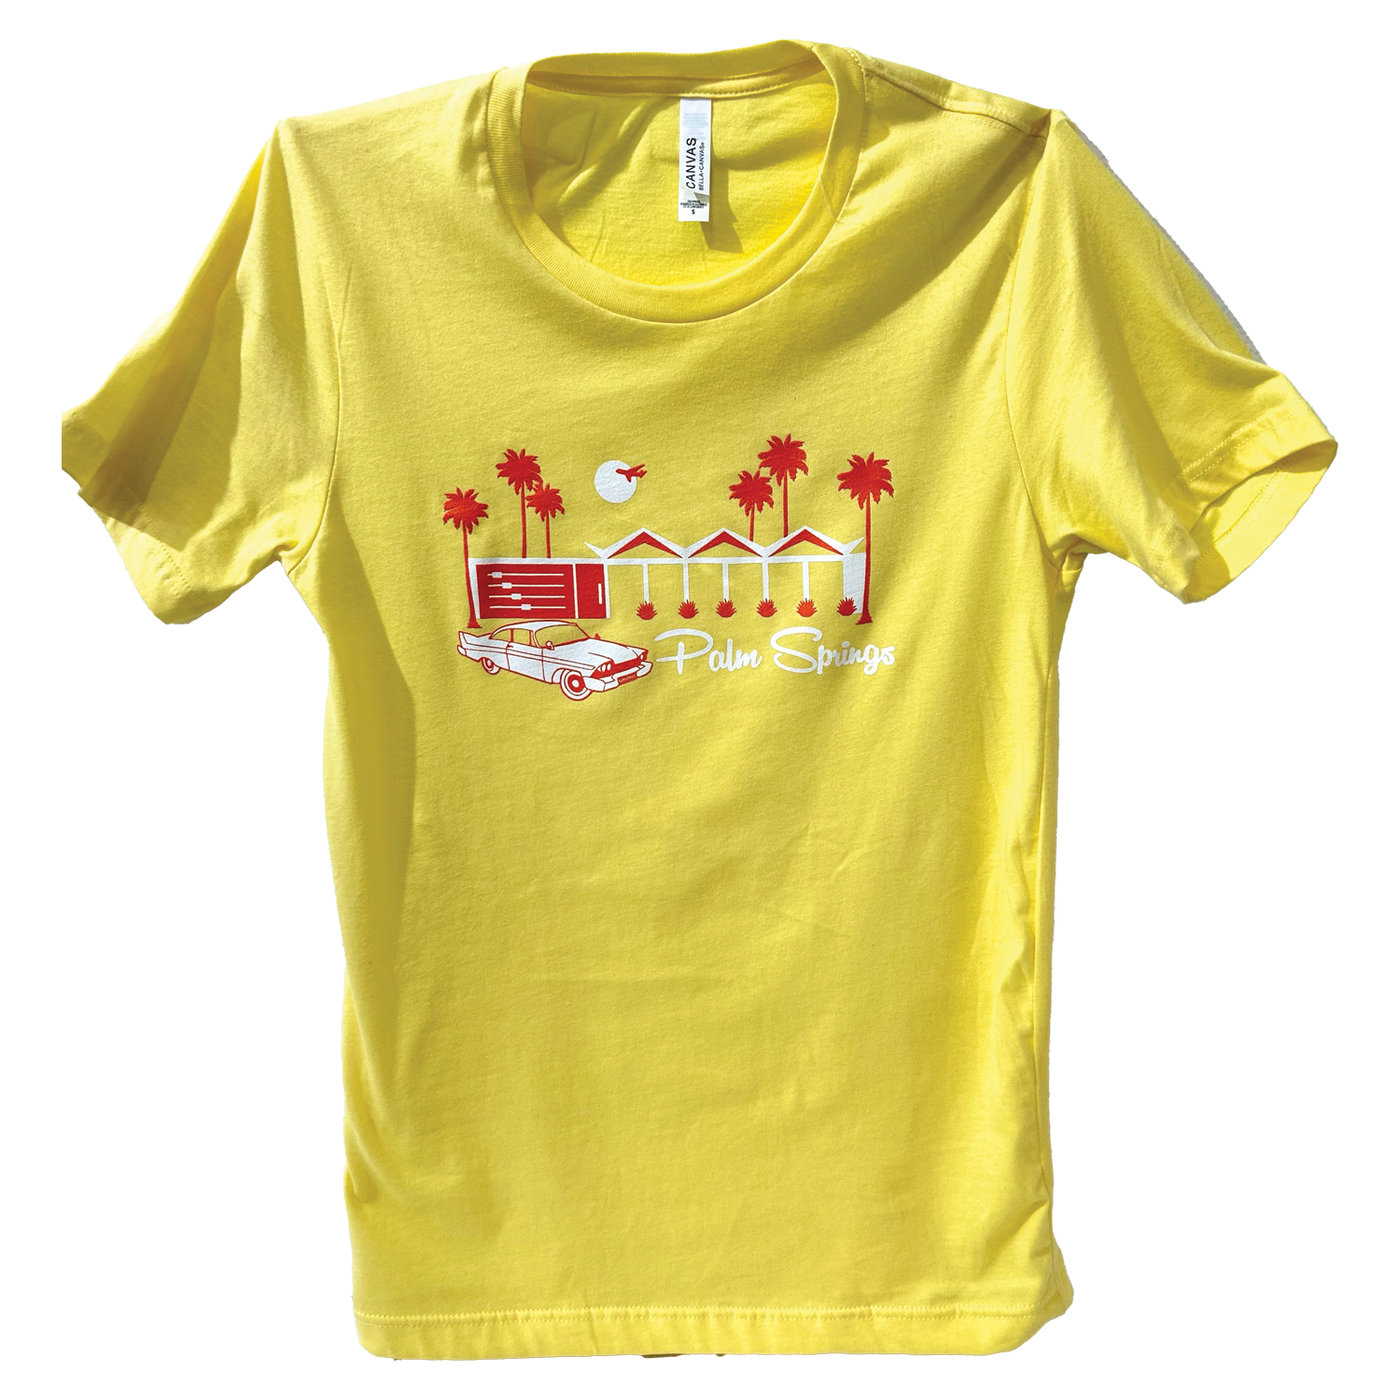 Zig Zag Unisex Crew Neck T-Shirt - Yellow/Orange 2021B